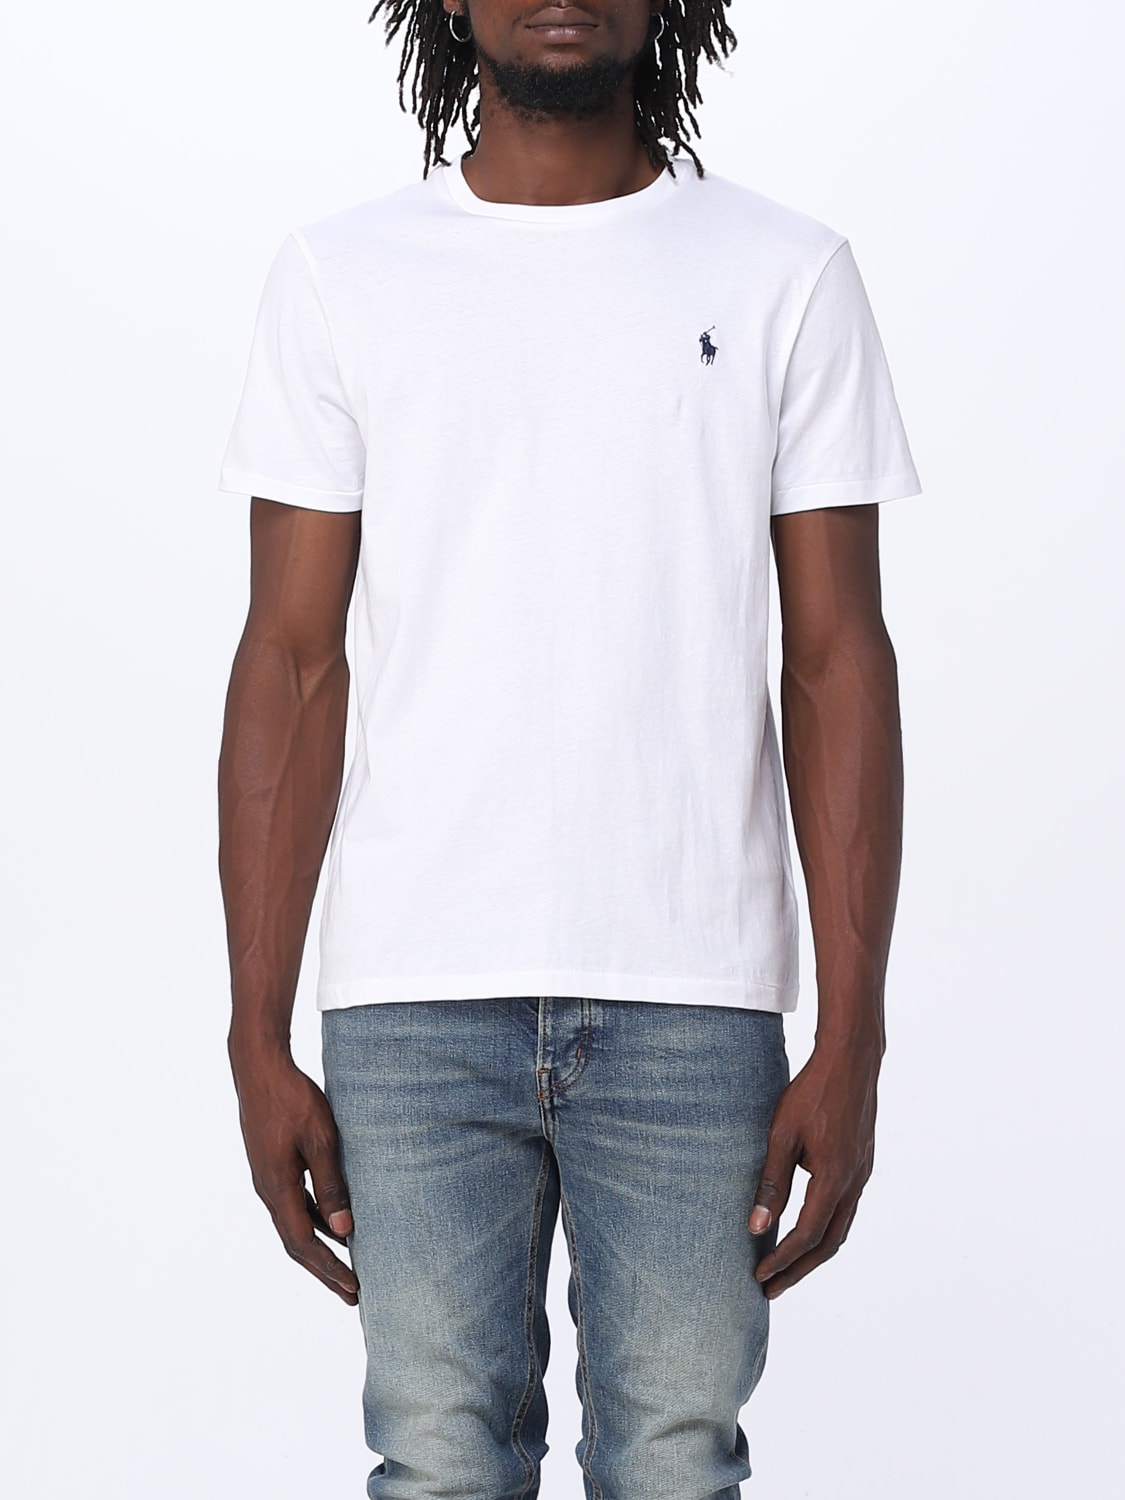 POLO RALPH LAUREN: t-shirt for man - White | Polo Ralph Lauren t-shirt ...